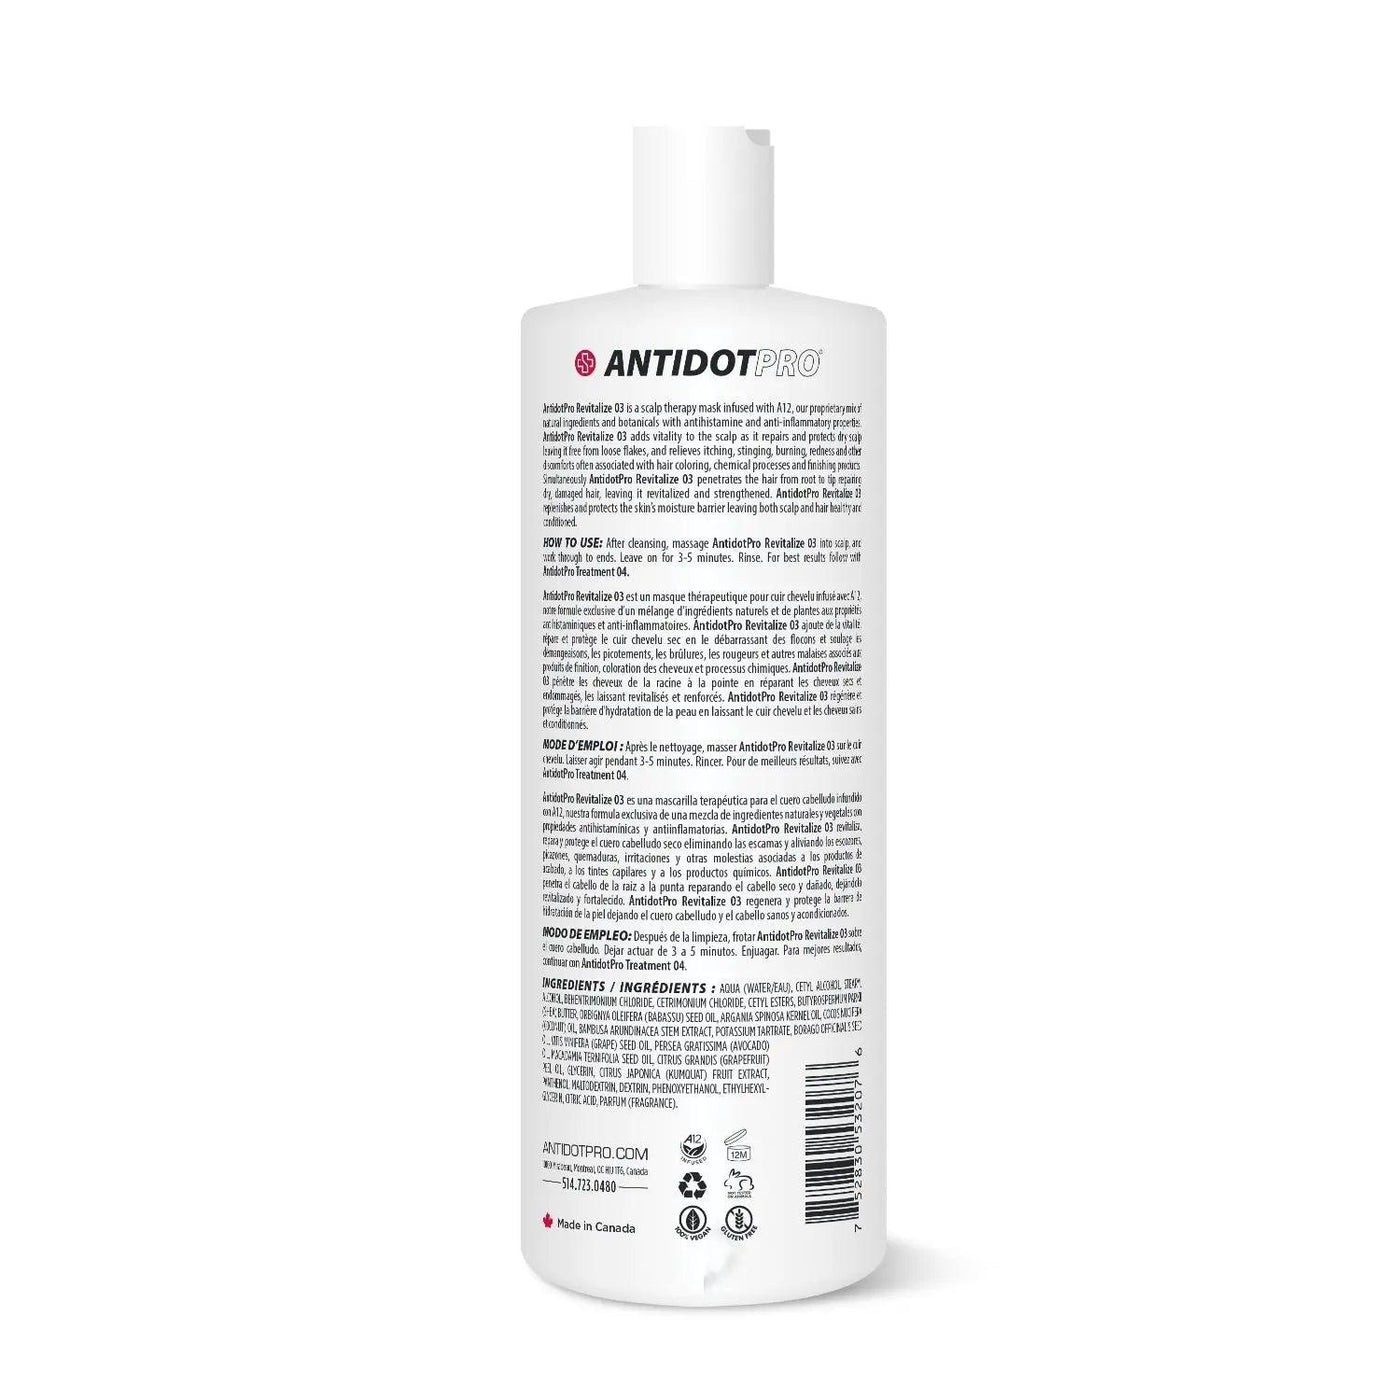 AntidotPro 03 Revitalize - 1000ML Antidotpro Boutique Deauville